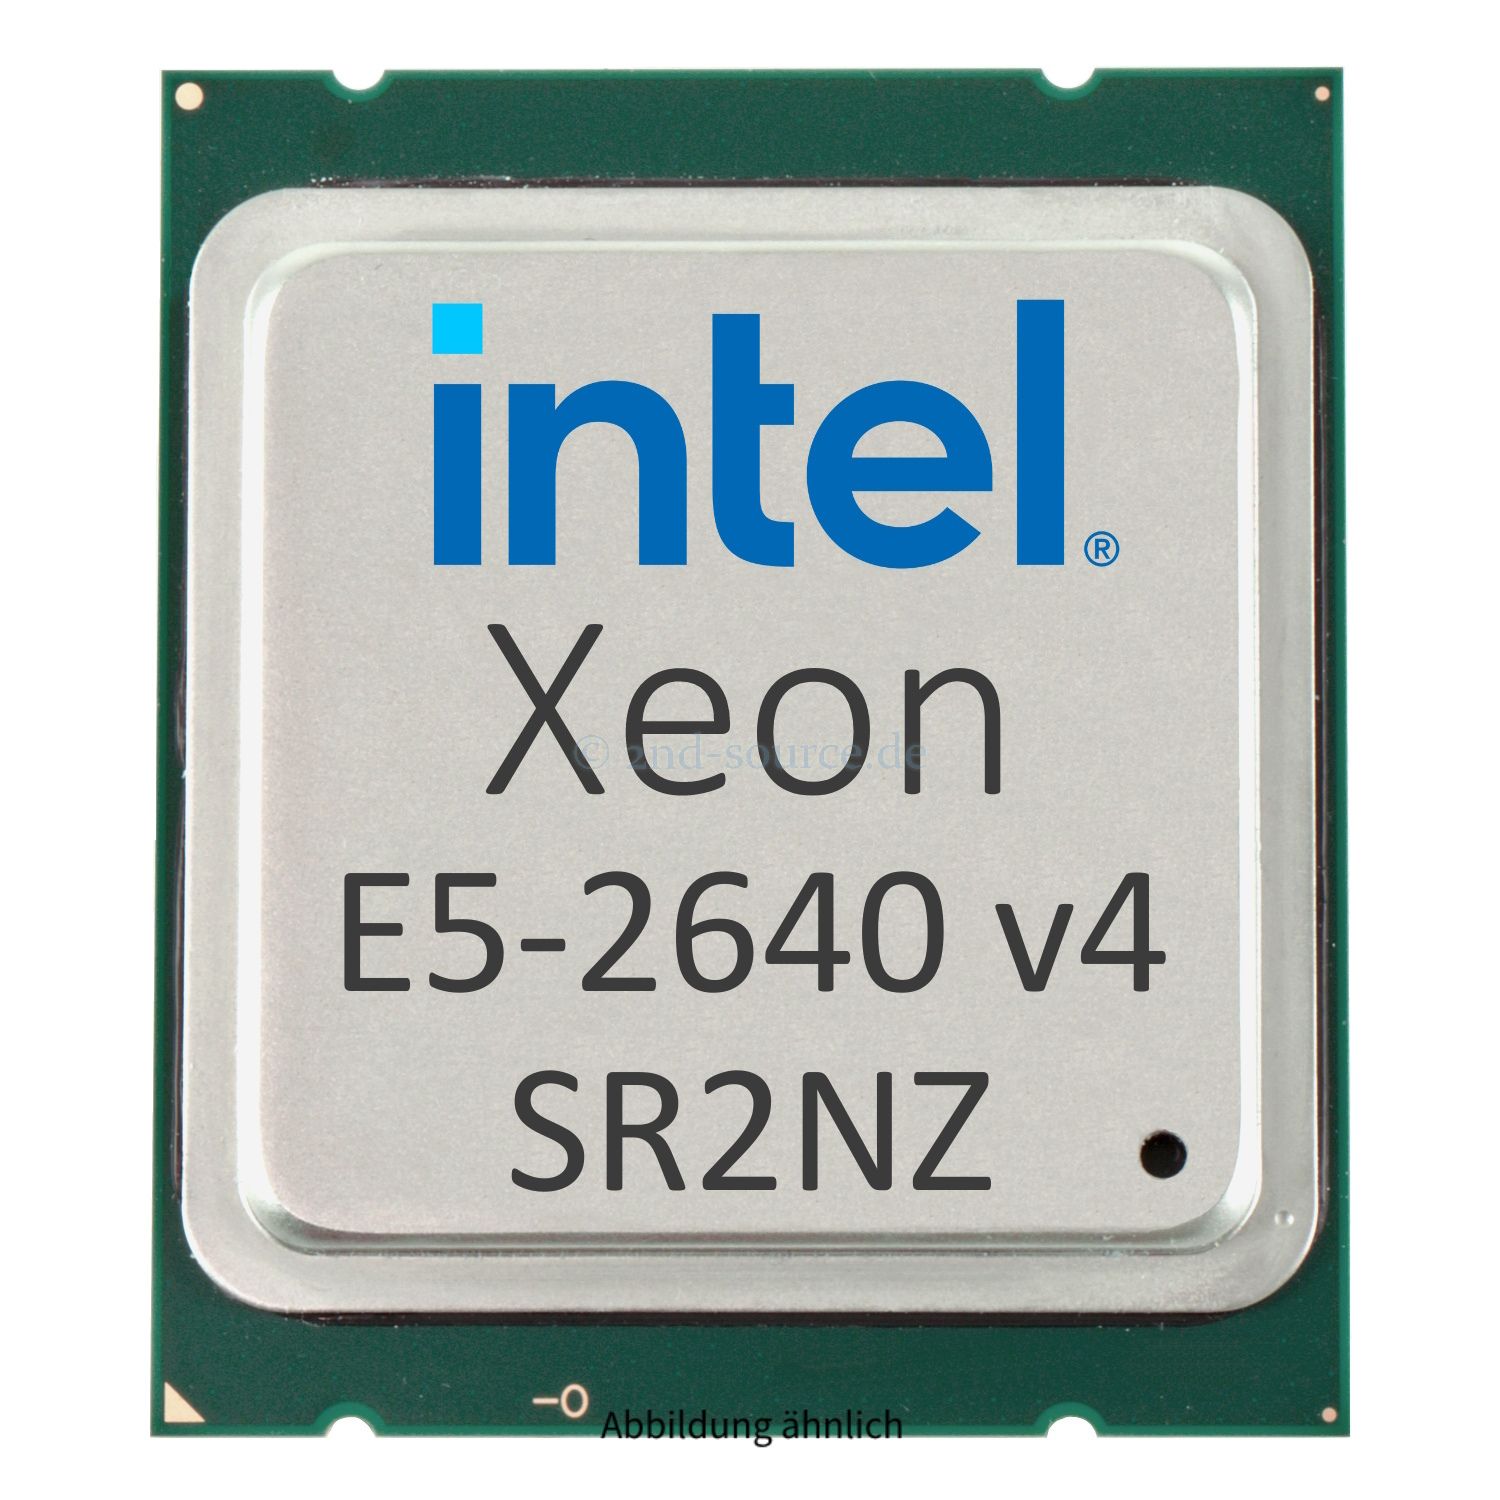 Intel Xeon E5-2640 v4 2.40GHz 25MB 10-Core CPU 90W SR2NZ CM8066002032701